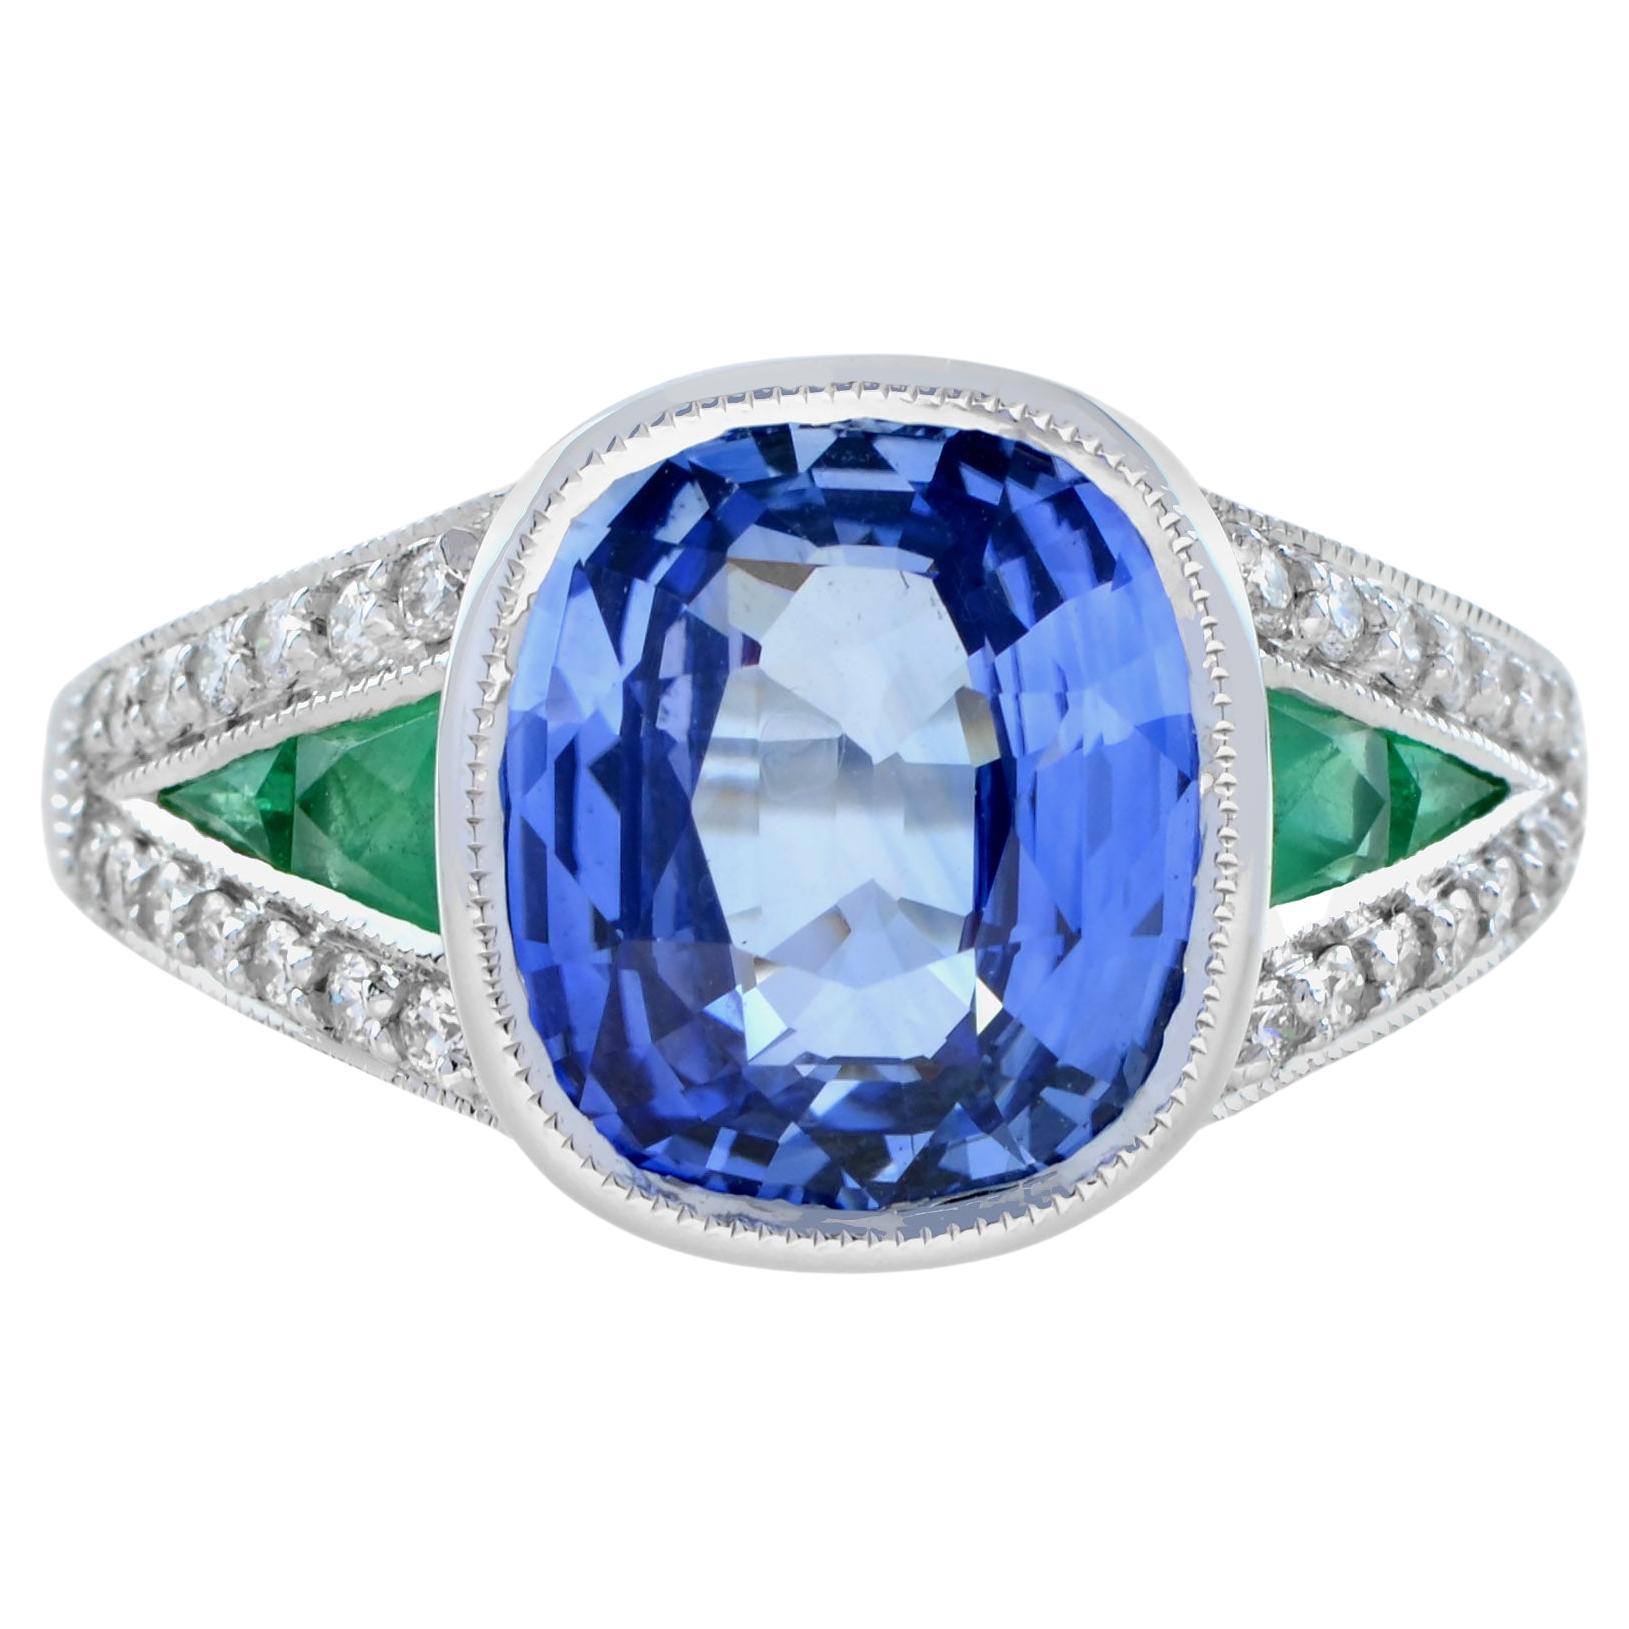 Certified 4.47 Ct. Ceylon Sapphire Emerald Diamond Ring in 18K White Gold